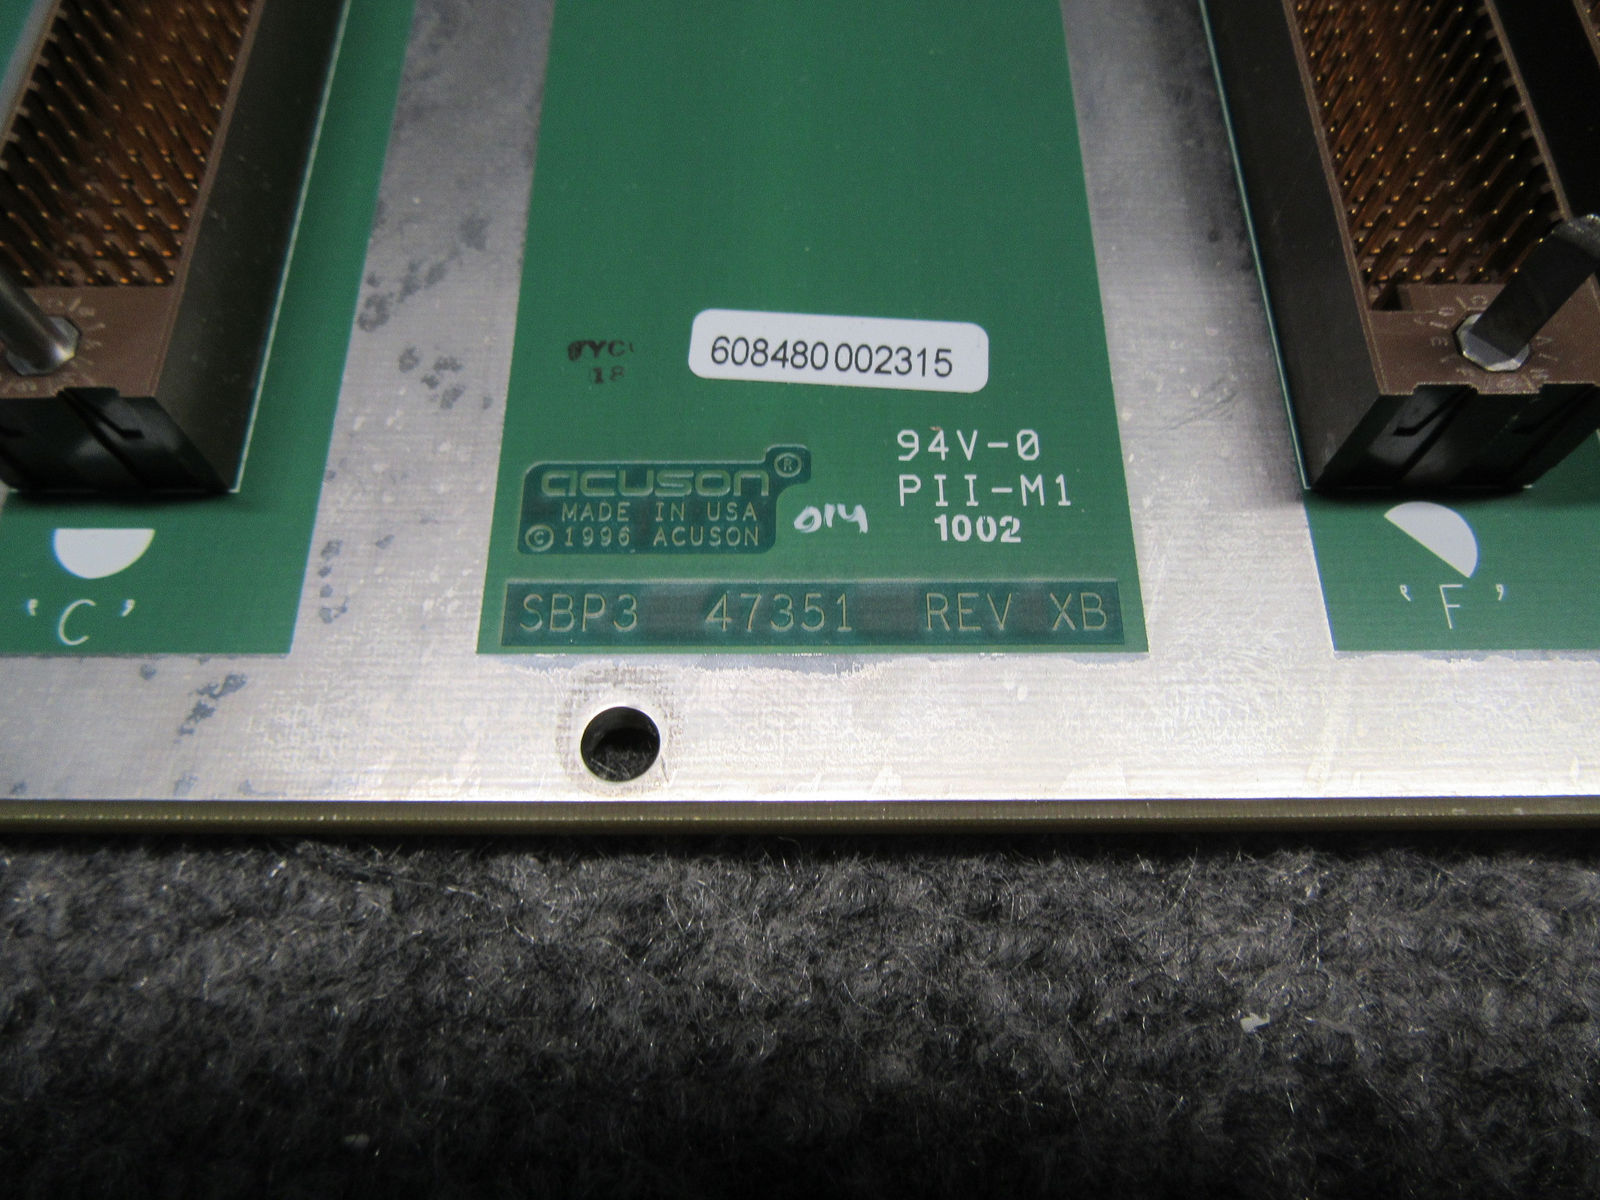 Siemens Acuson Sequoia Ultrasound C256 SBP3 Board P/N: 47351 REV XB DIAGNOSTIC ULTRASOUND MACHINES FOR SALE